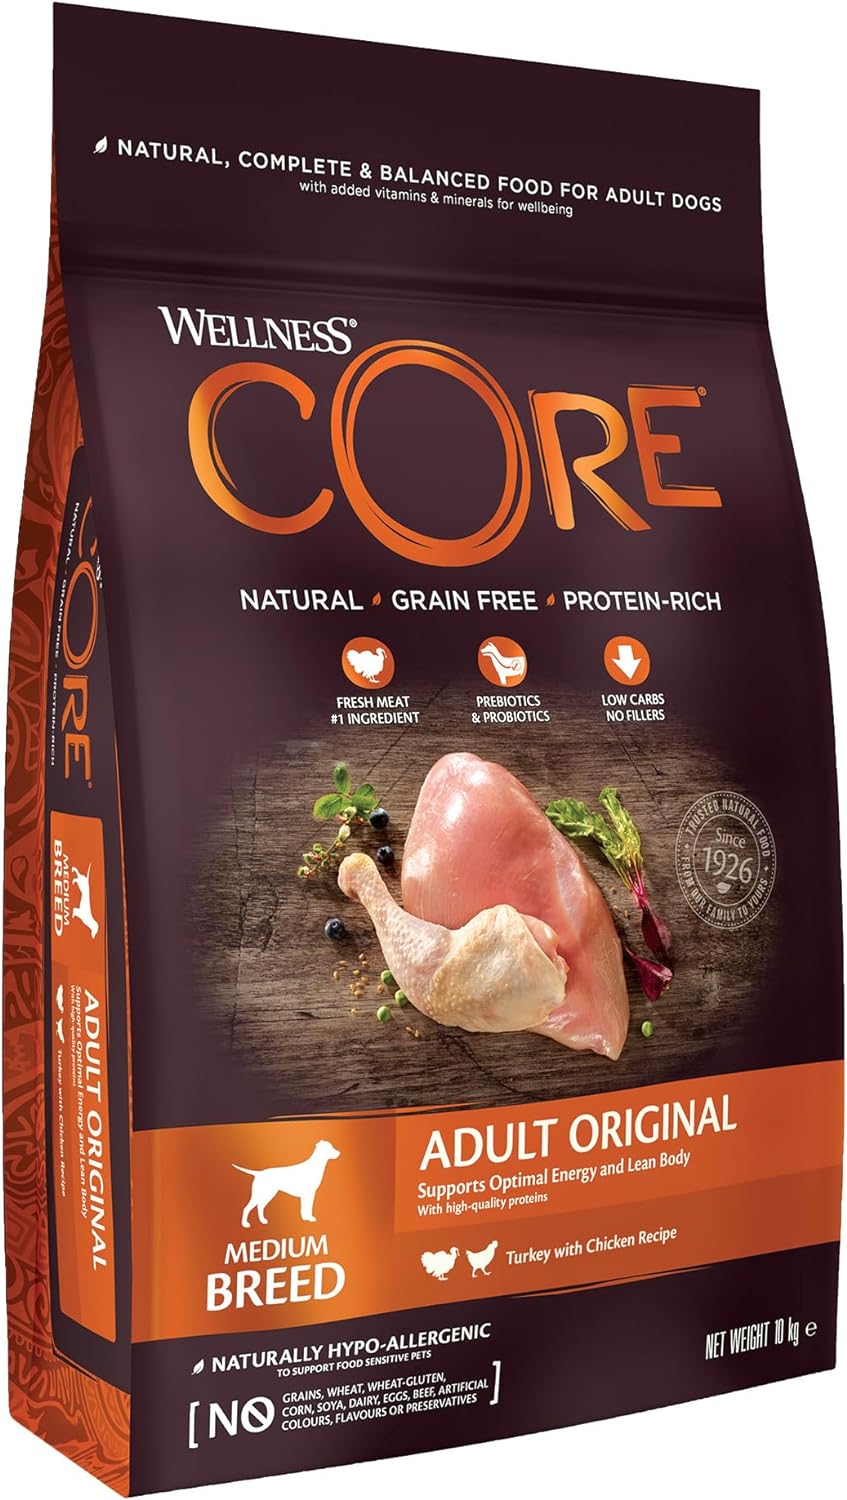 Wellness CORE Adult Original, Dry Dog Food, Dog Food Dry, Grain Free Dog Food, High Meat Content, Turkey & Chicken, 10 kg?10753